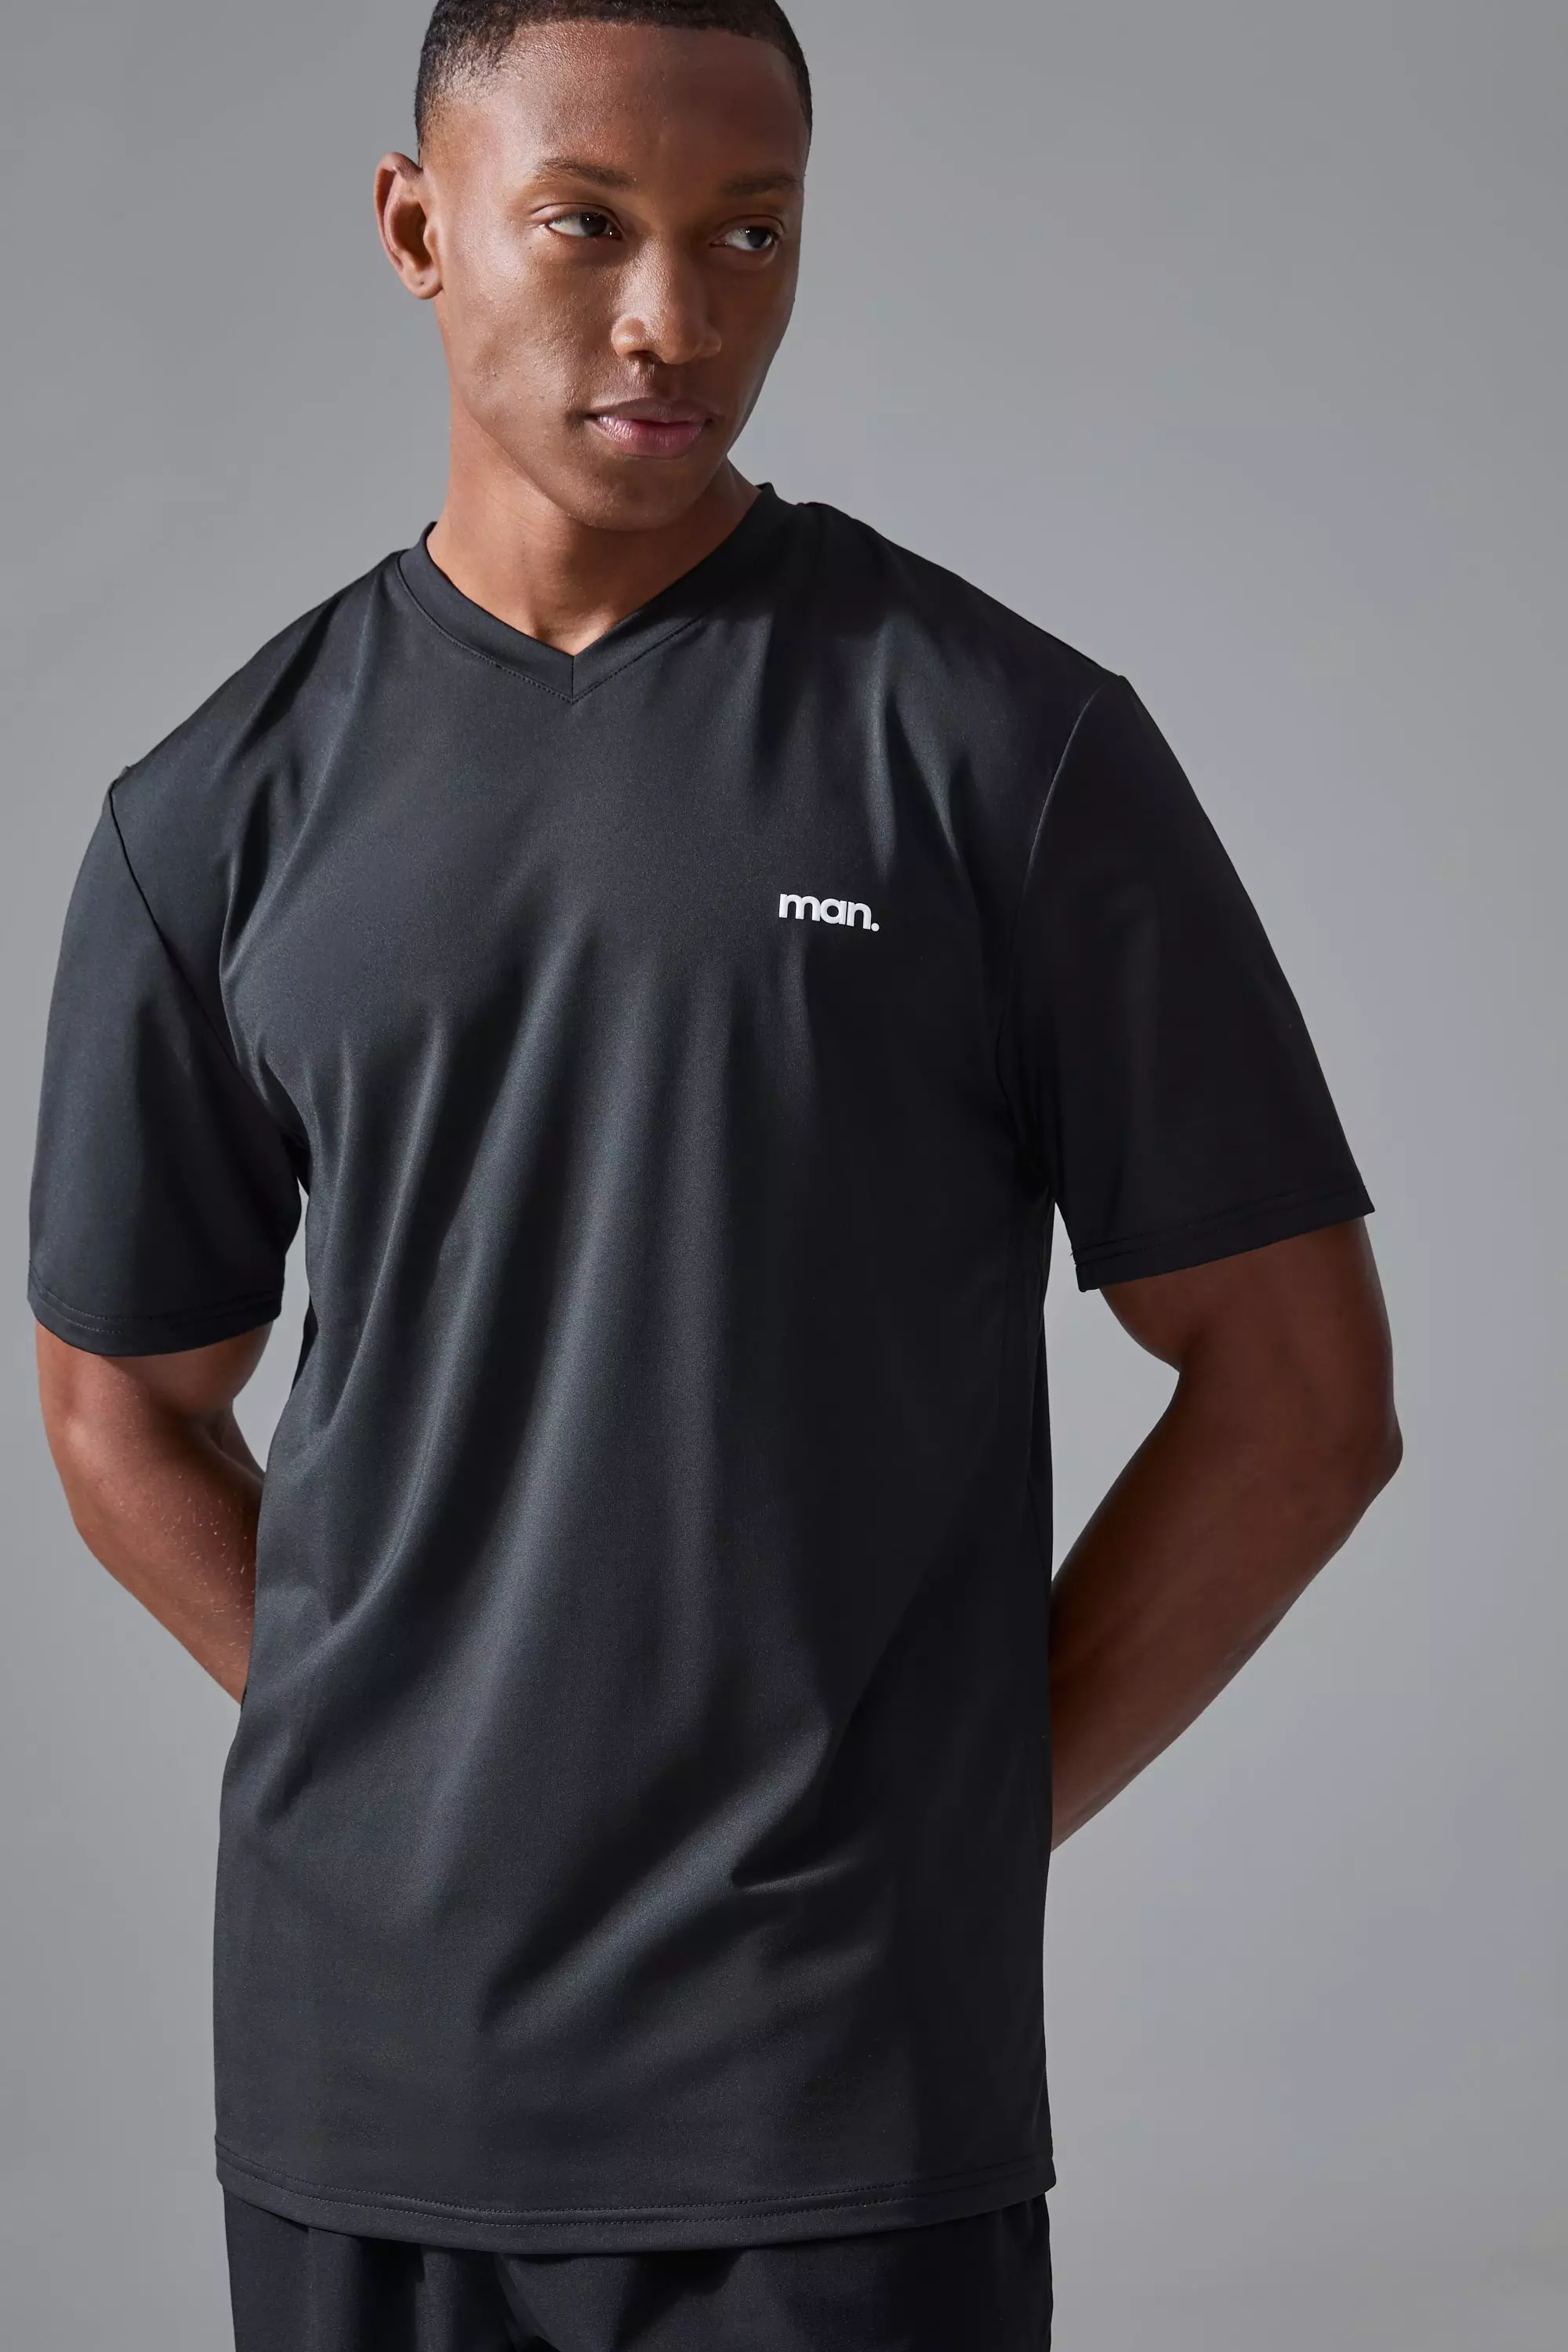 Man Sport V Neck Performance T-shirt Black